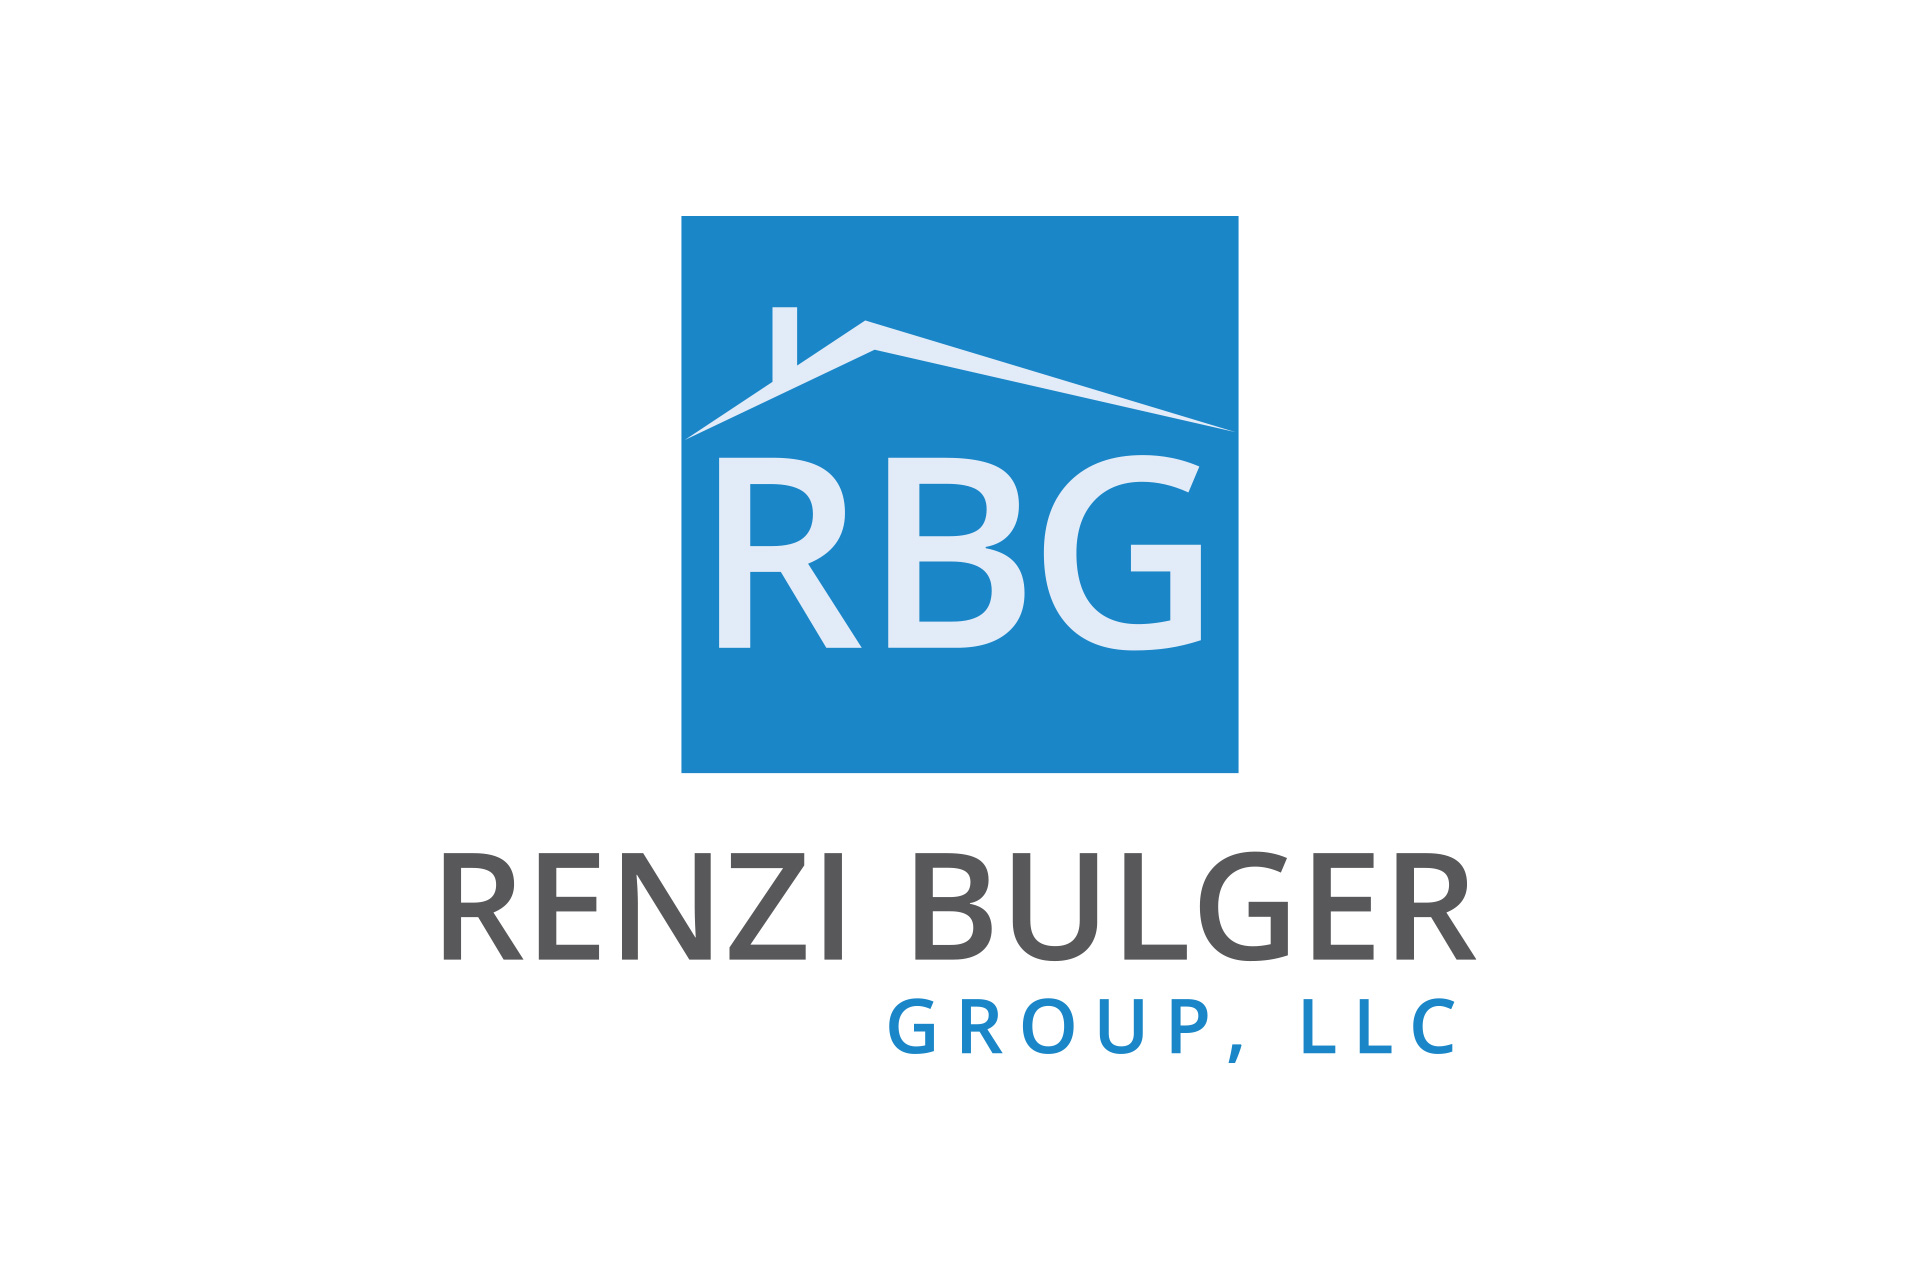 Renzi Bulger Group